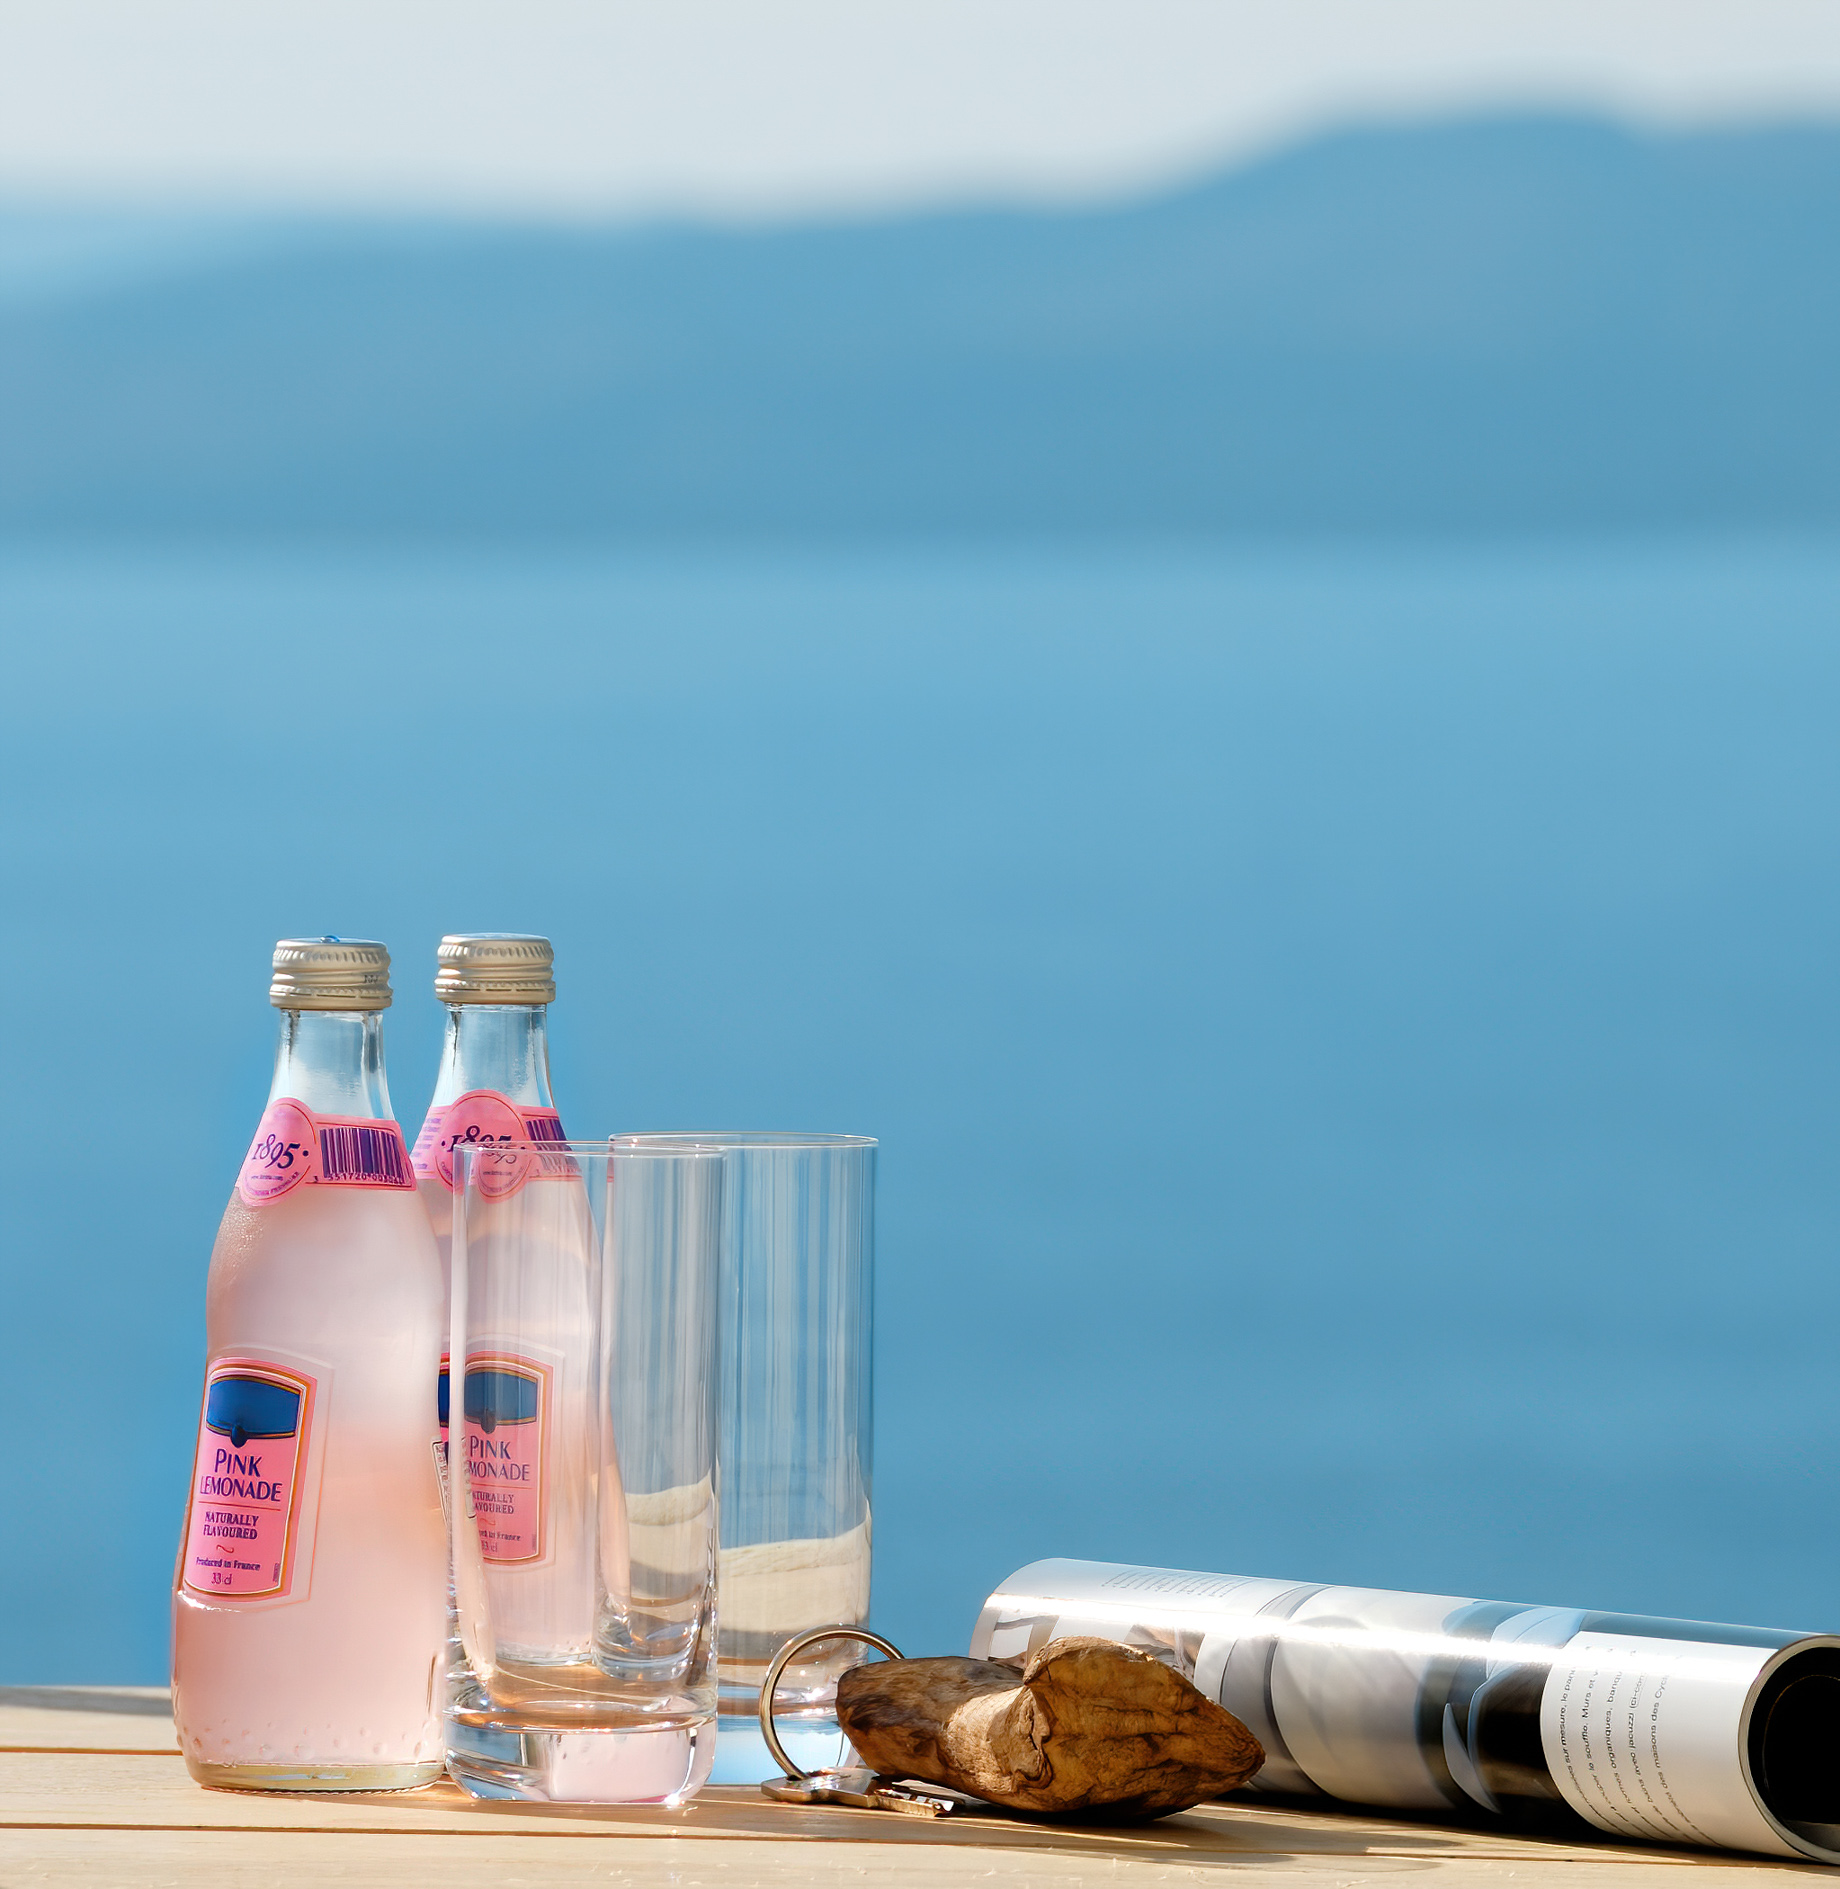 Mystique Hotel Santorini – Oia, Santorini Island, Greece – Clifftop Ocean View Beverages